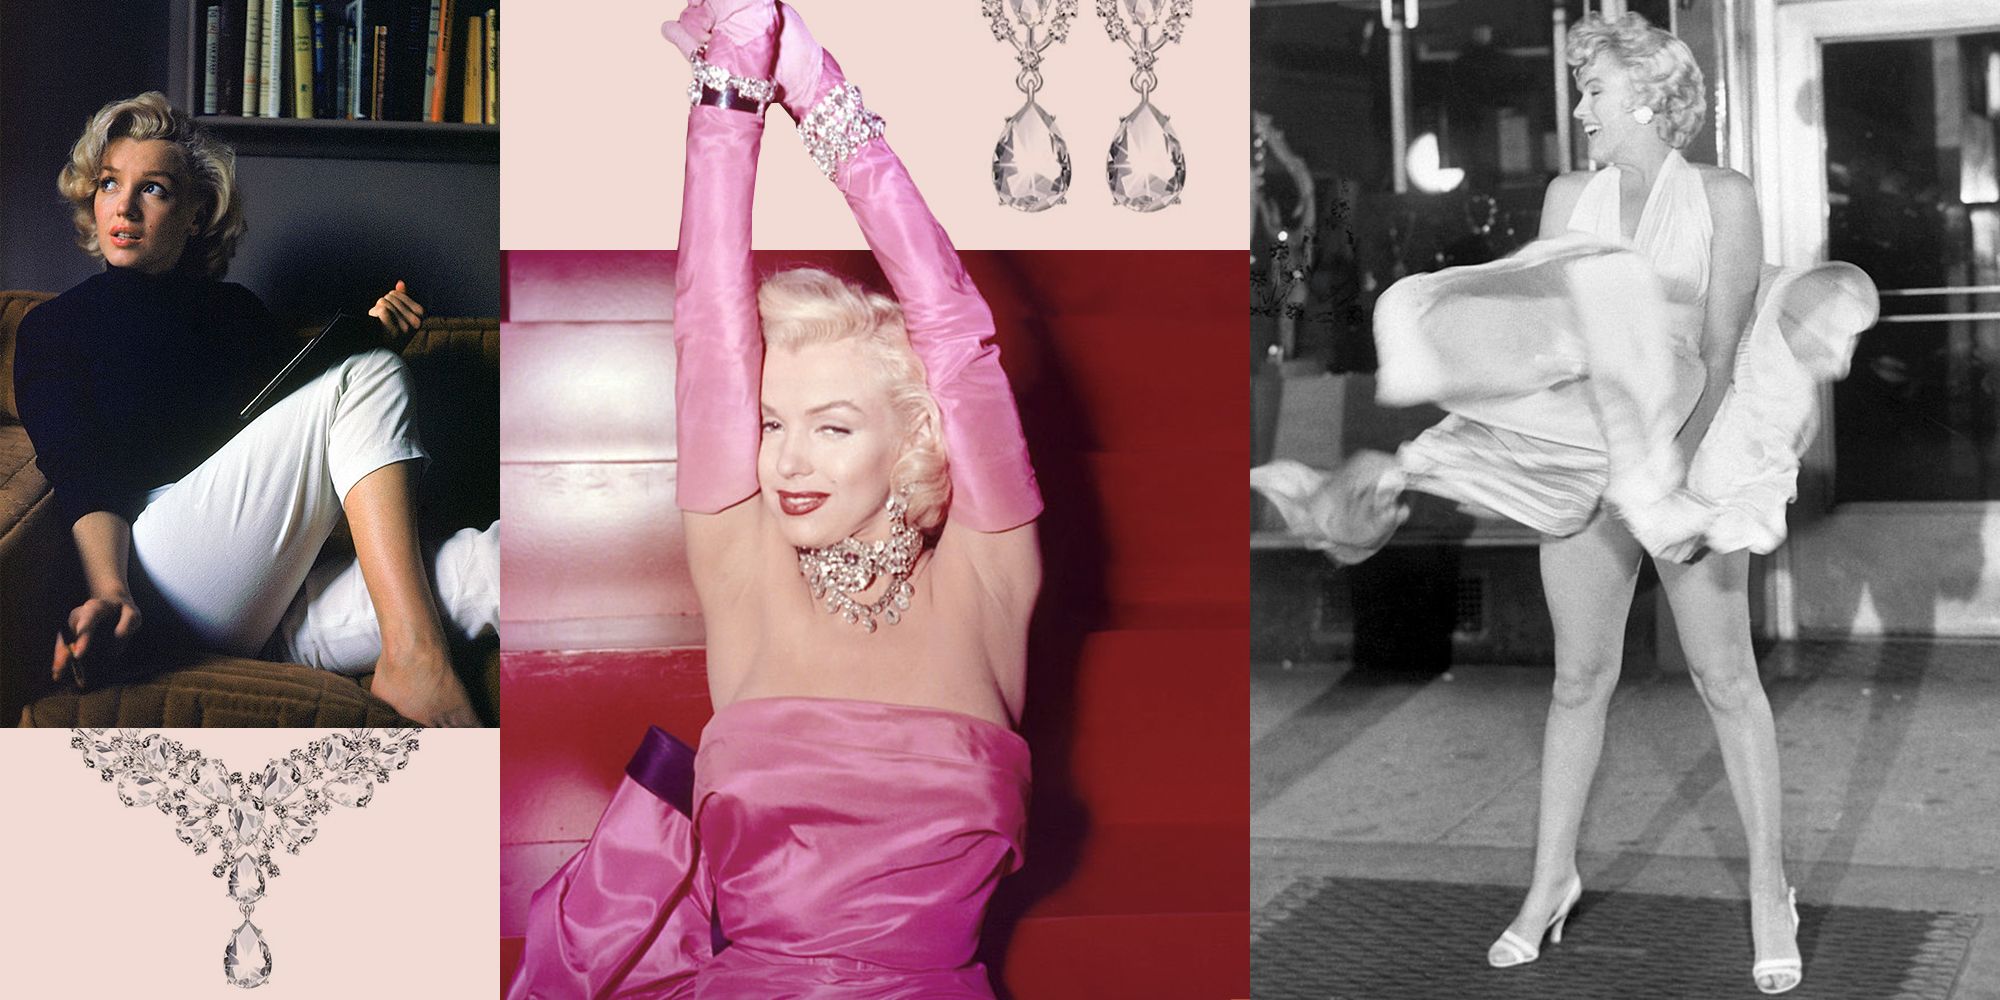 8 Best Marilyn Monroe Costumes for 2022 - DIY Marilyn Monroe Halloween Costume Ideas